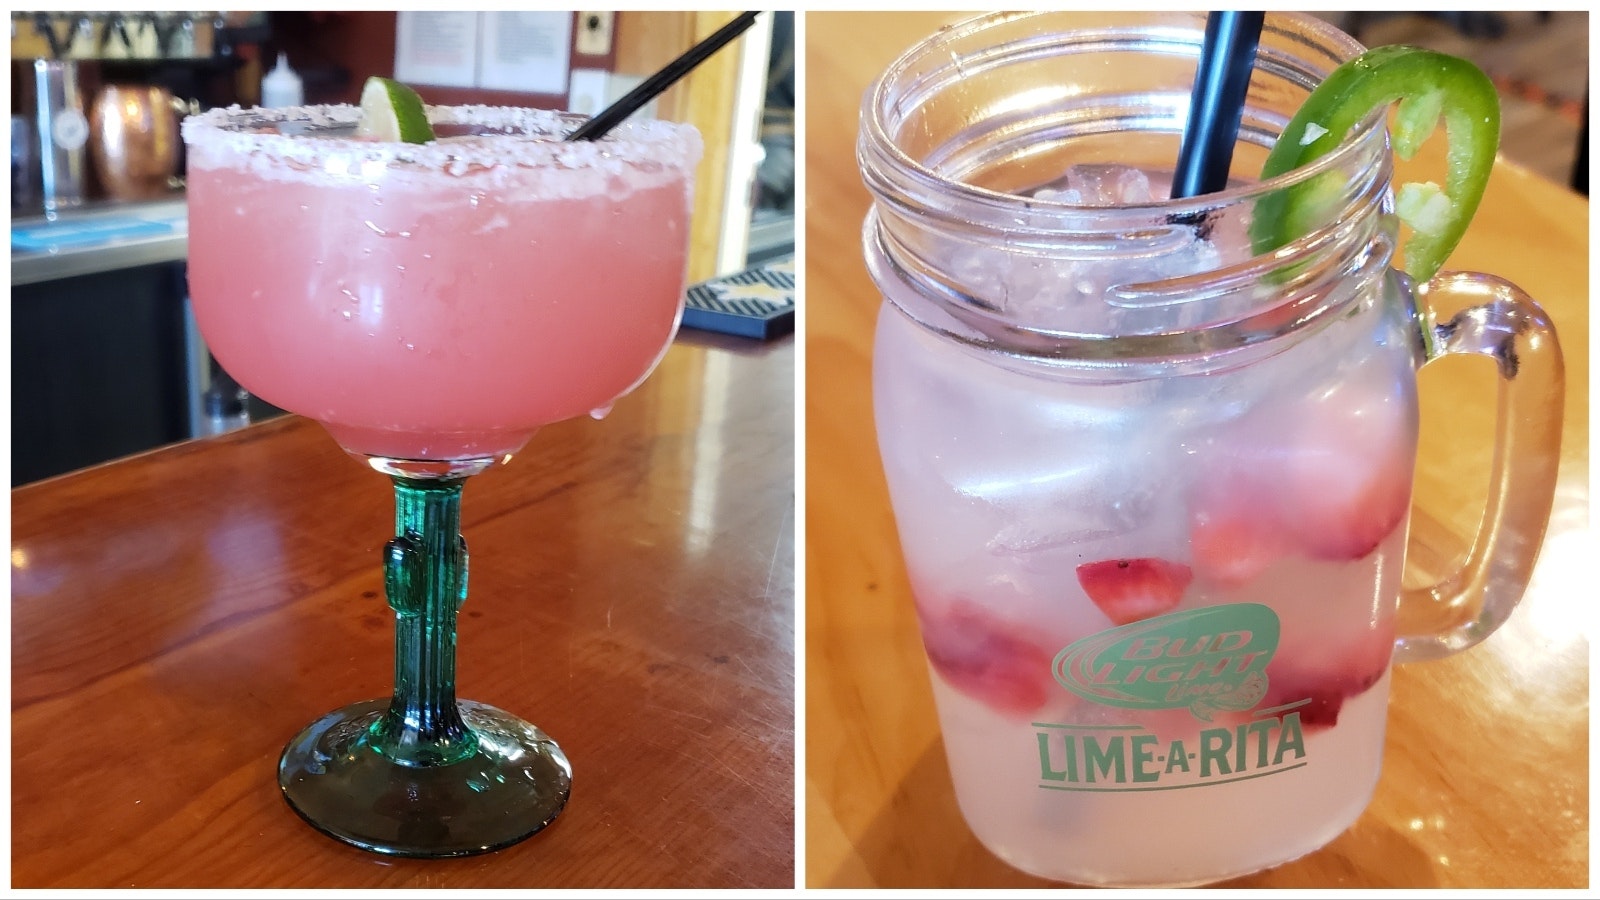 A pink maragrita and the lime-a-rita.